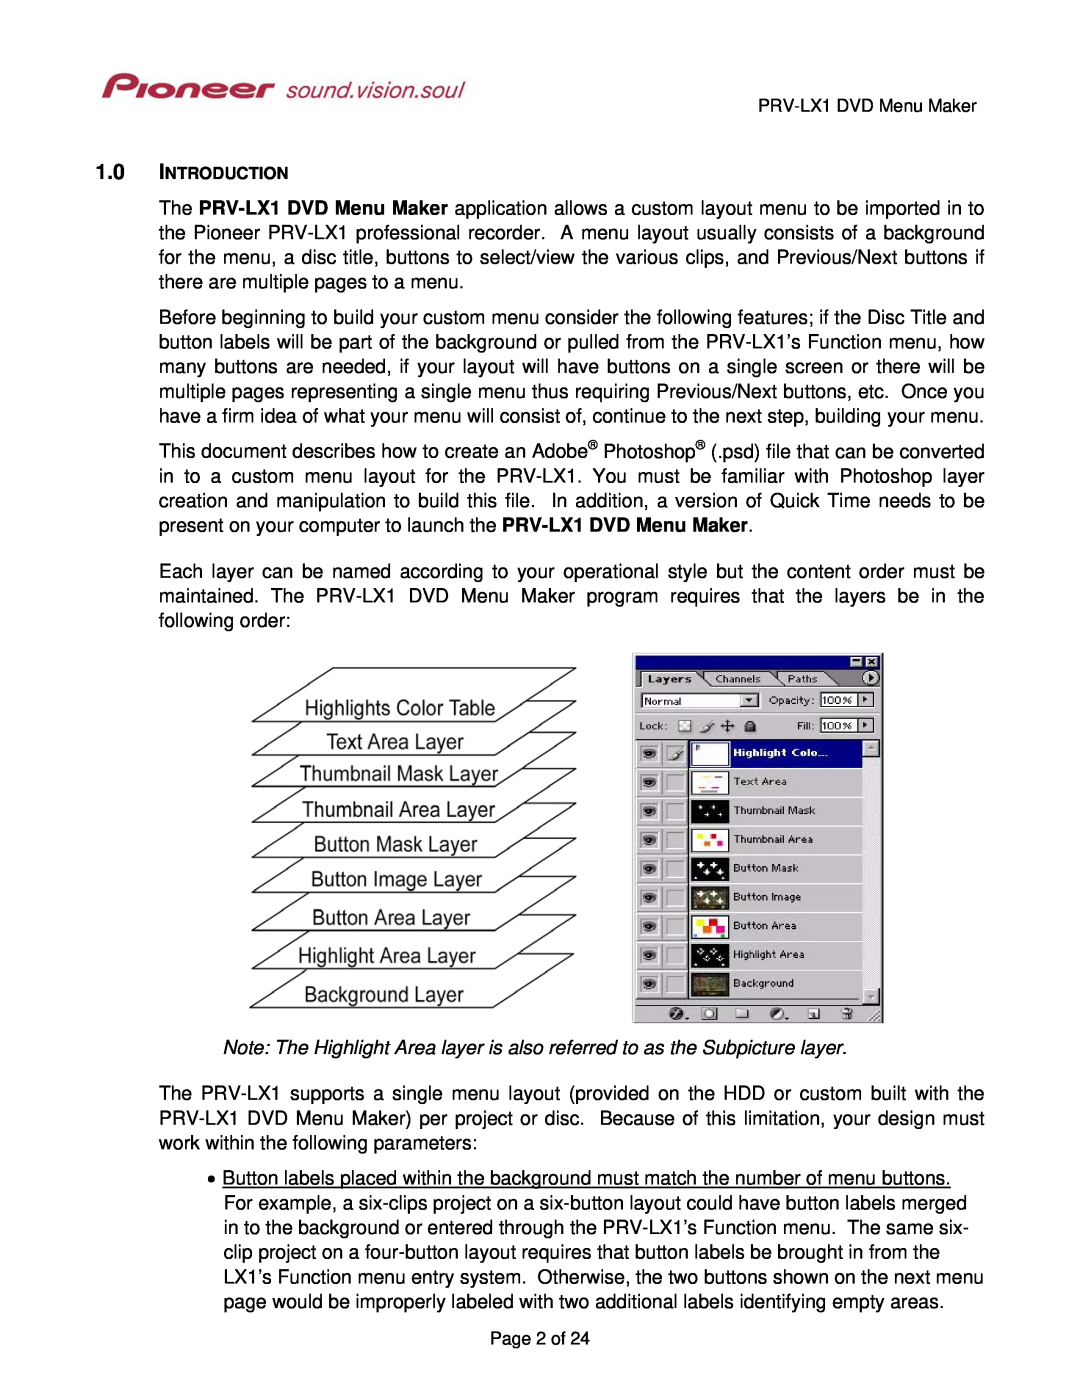 Pioneer manual PRV-LX1DVD Menu Maker, 1.0INTRODUCTION, Page 2 of 